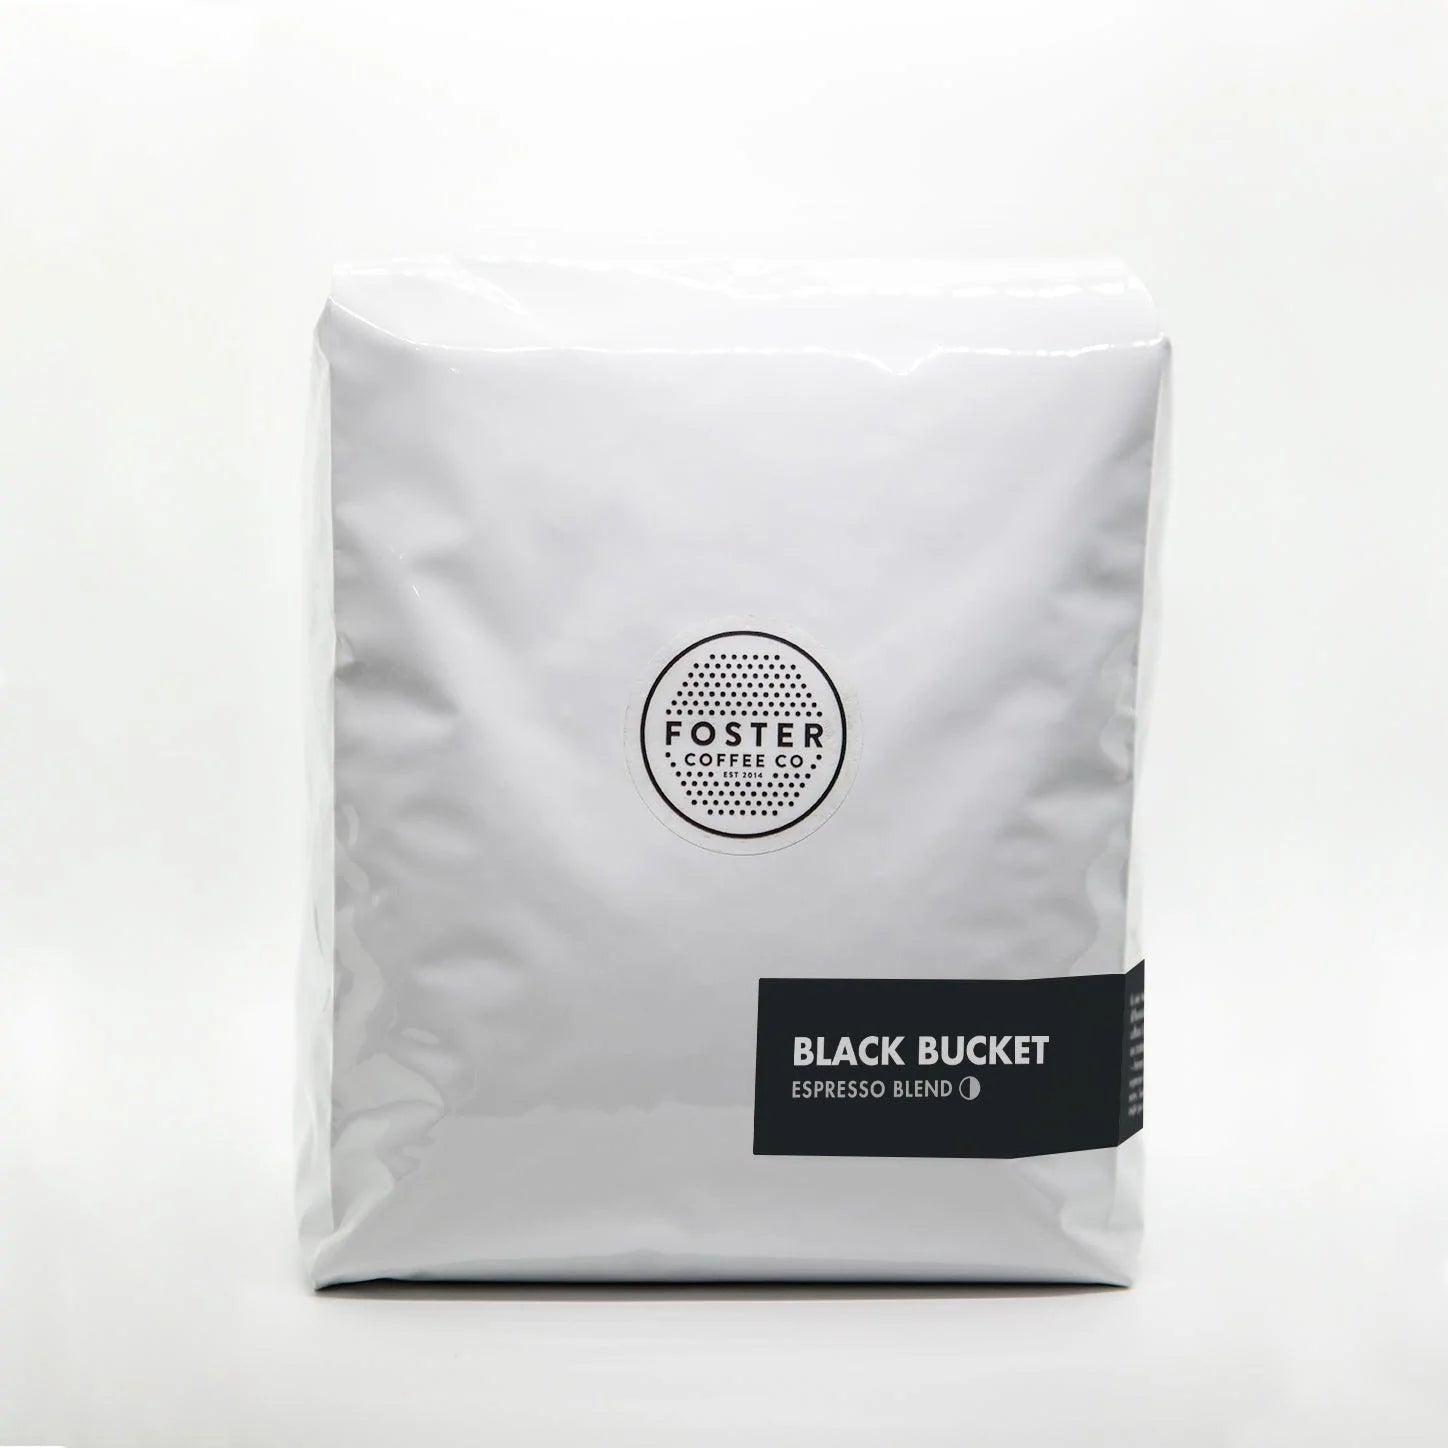 Black Bucket Espresso (Blend) - Wholesale - Foster Coffee